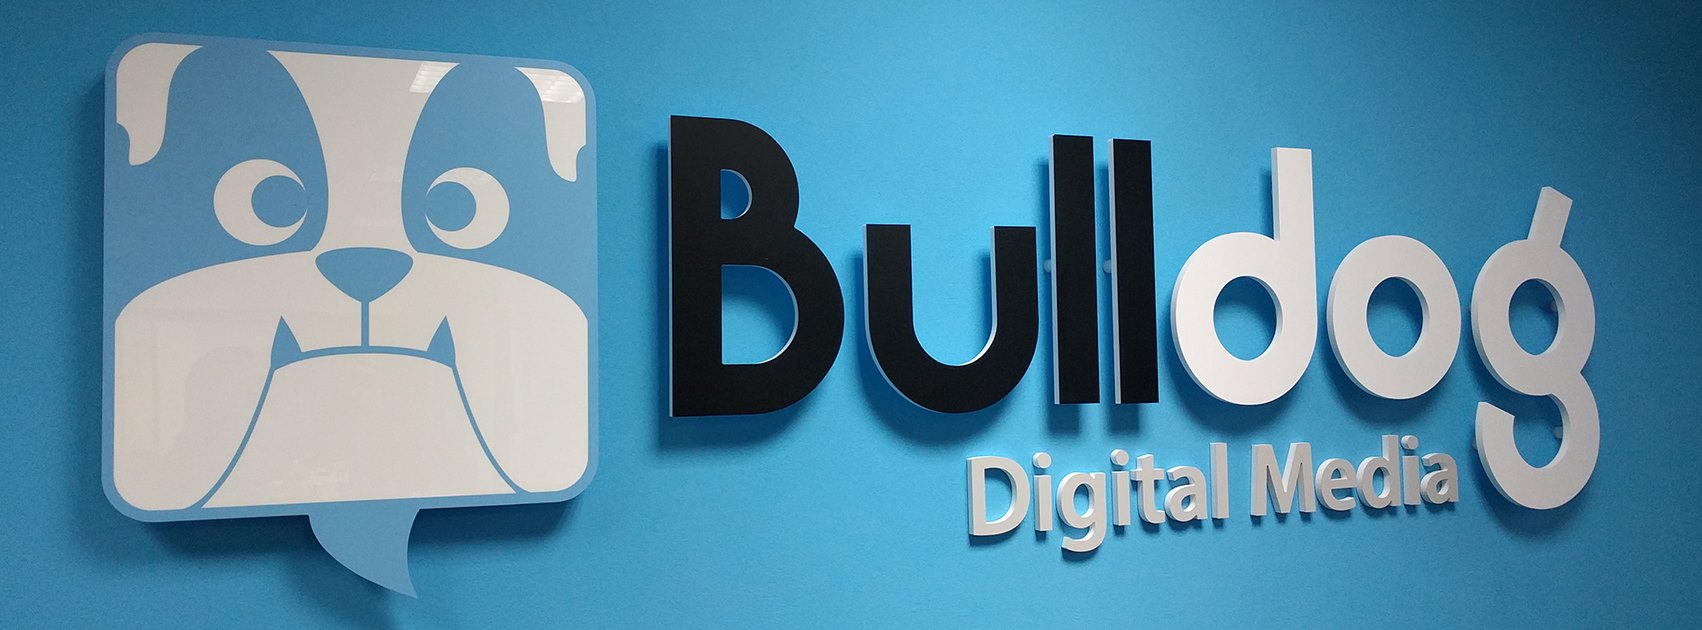 Bulldog Digital Media Limited